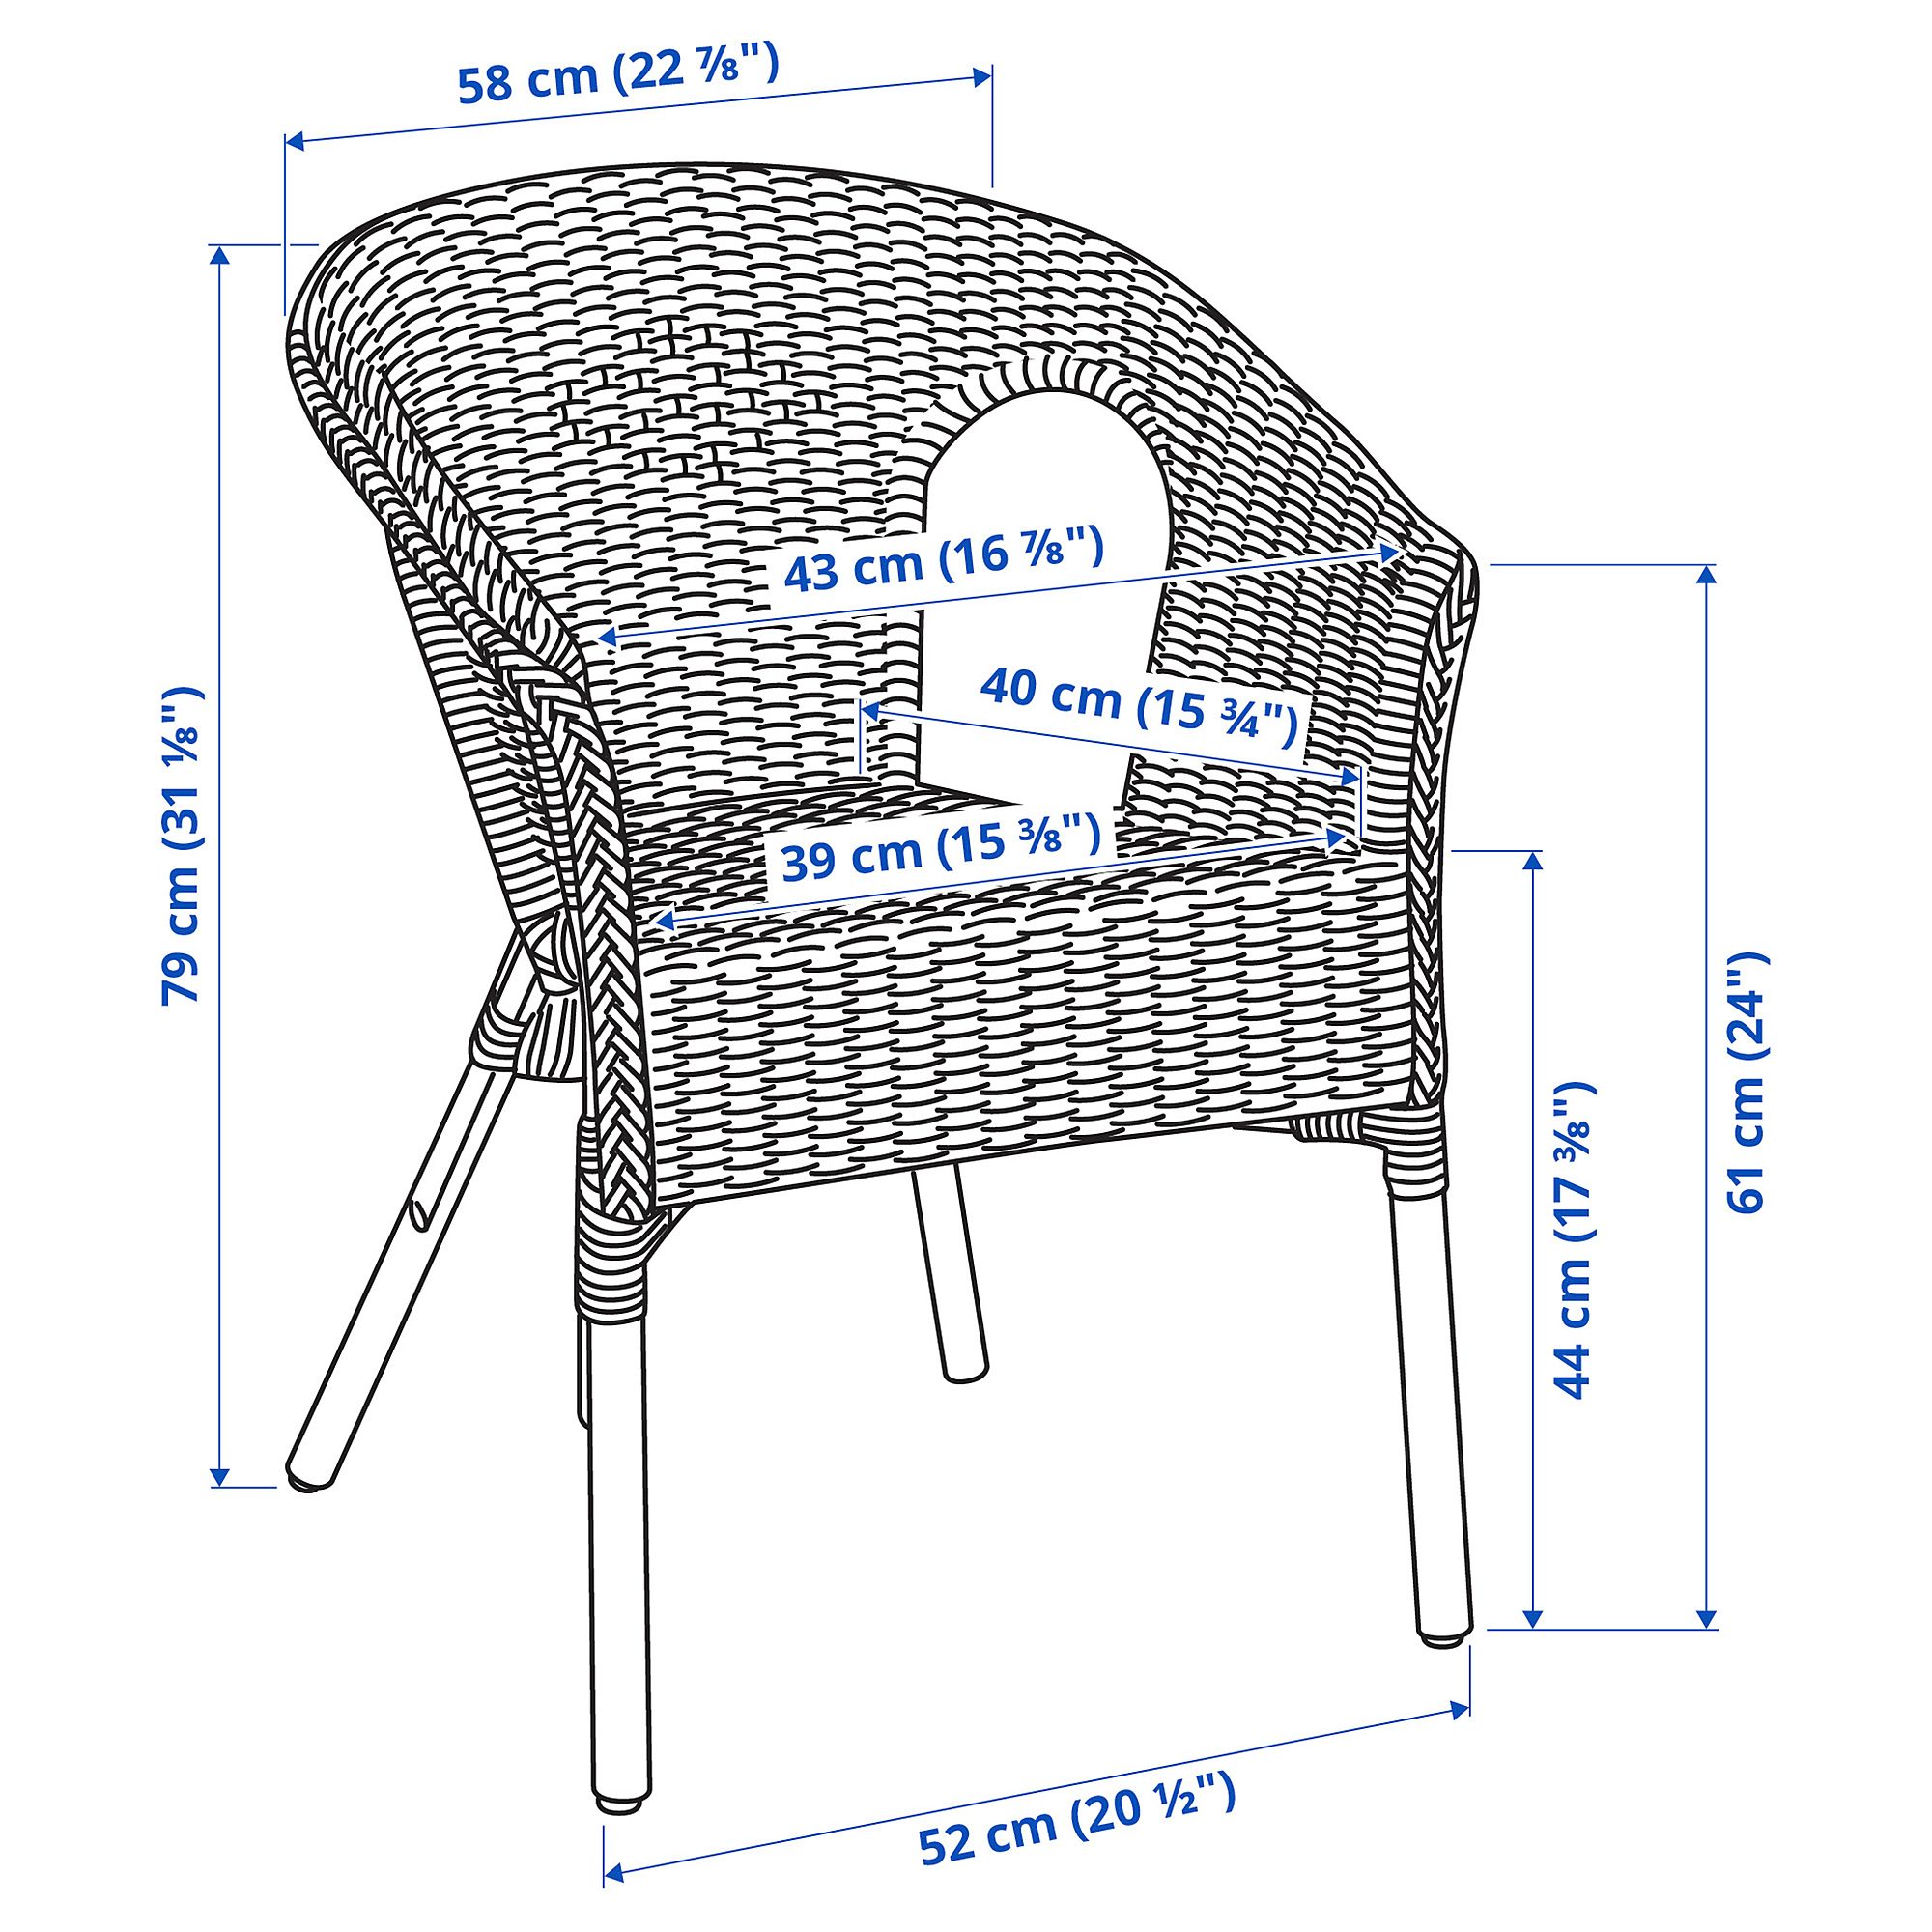 AGEN chair